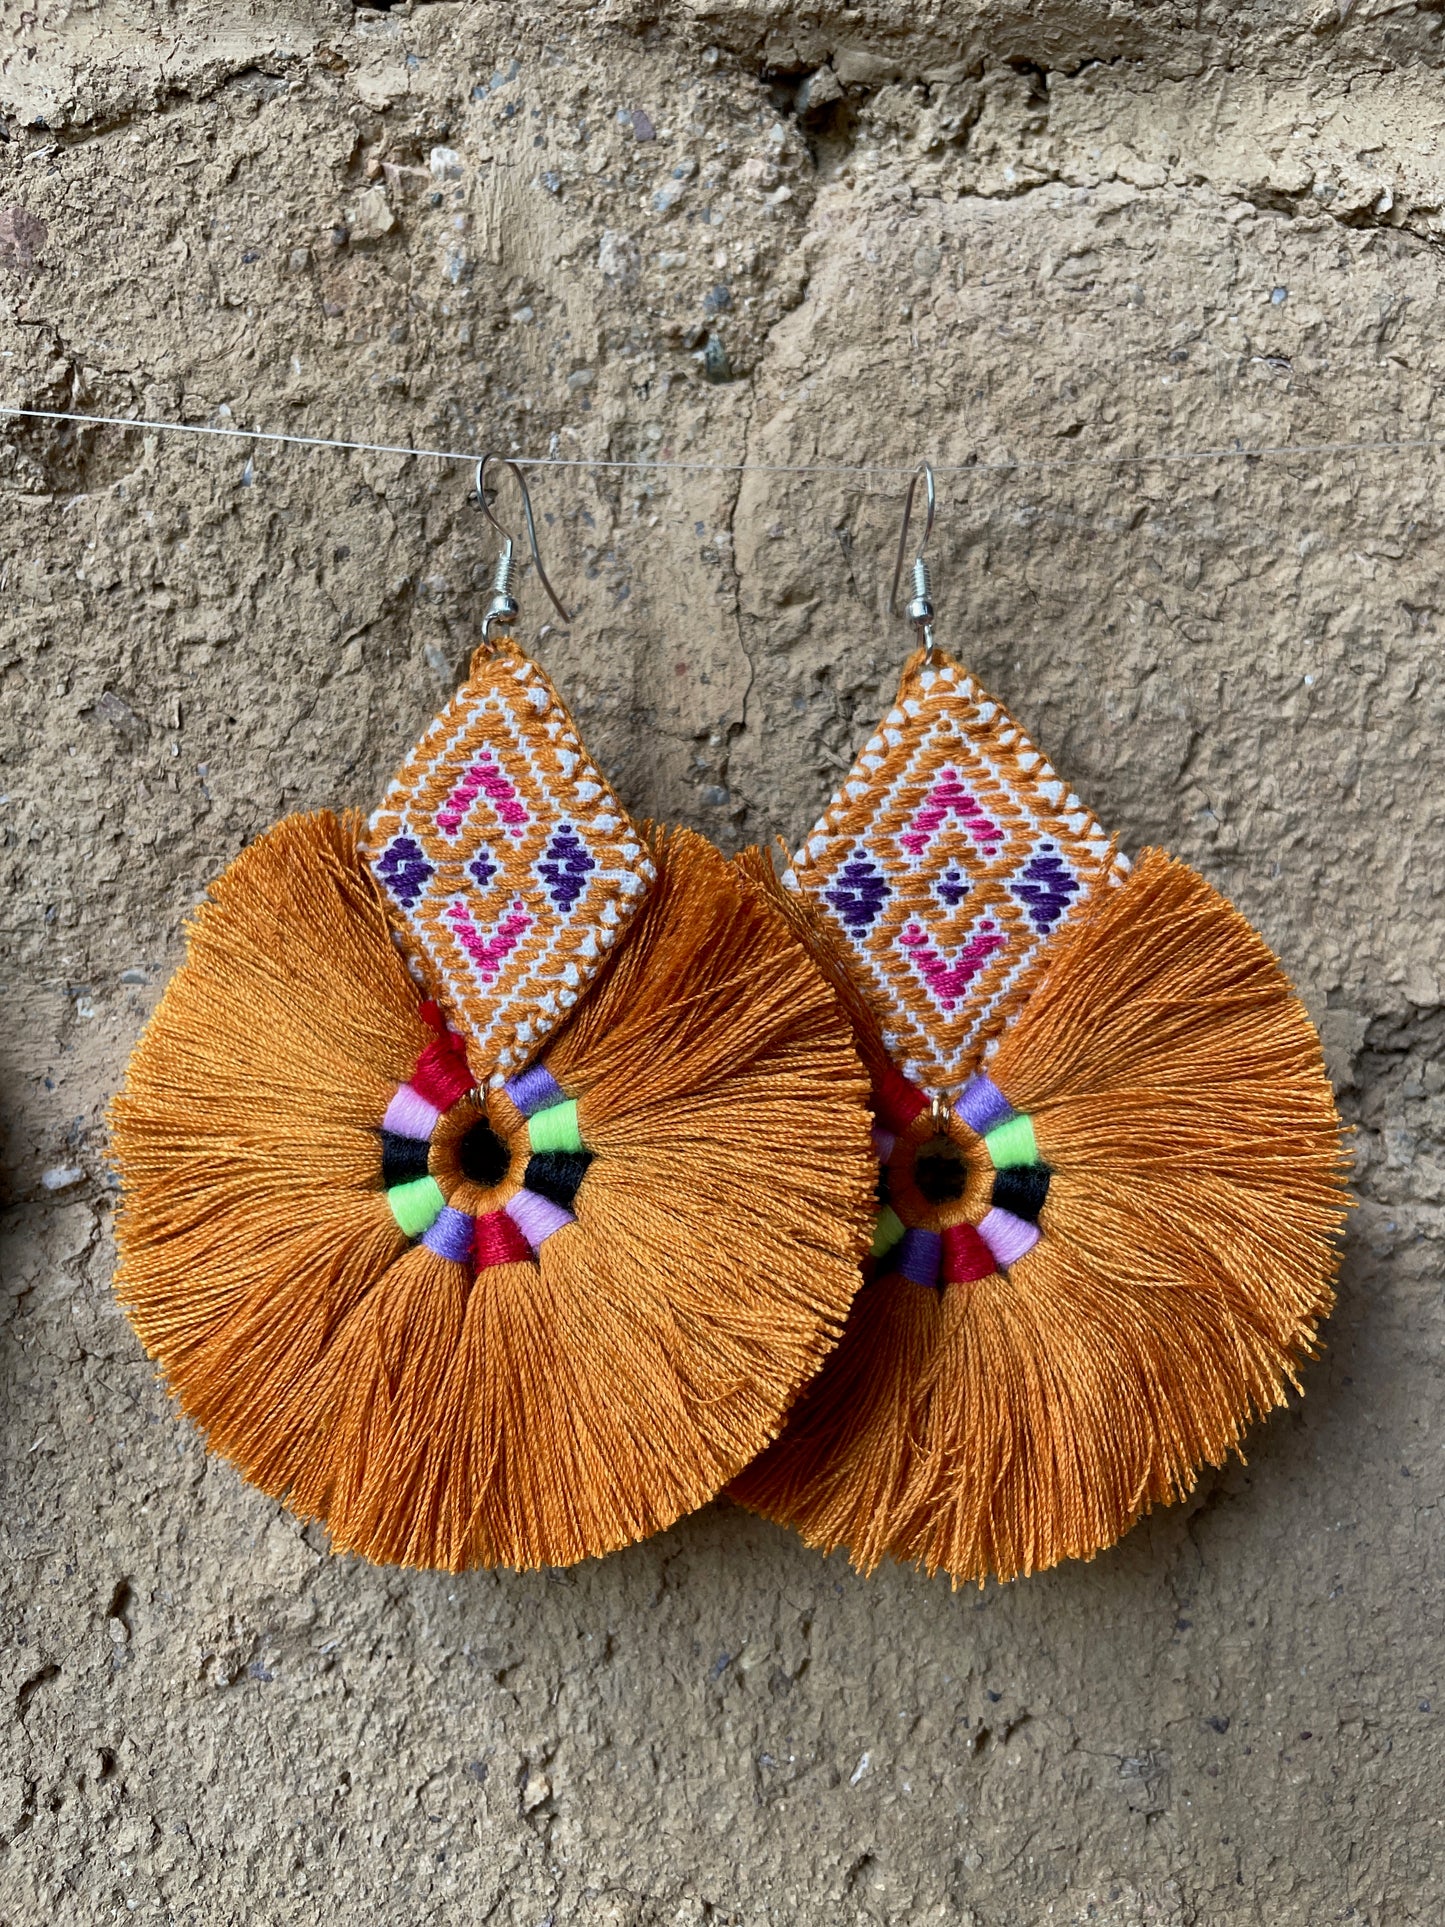 Circulo: Hand-Embroidered, Mayan Artisan Earrings